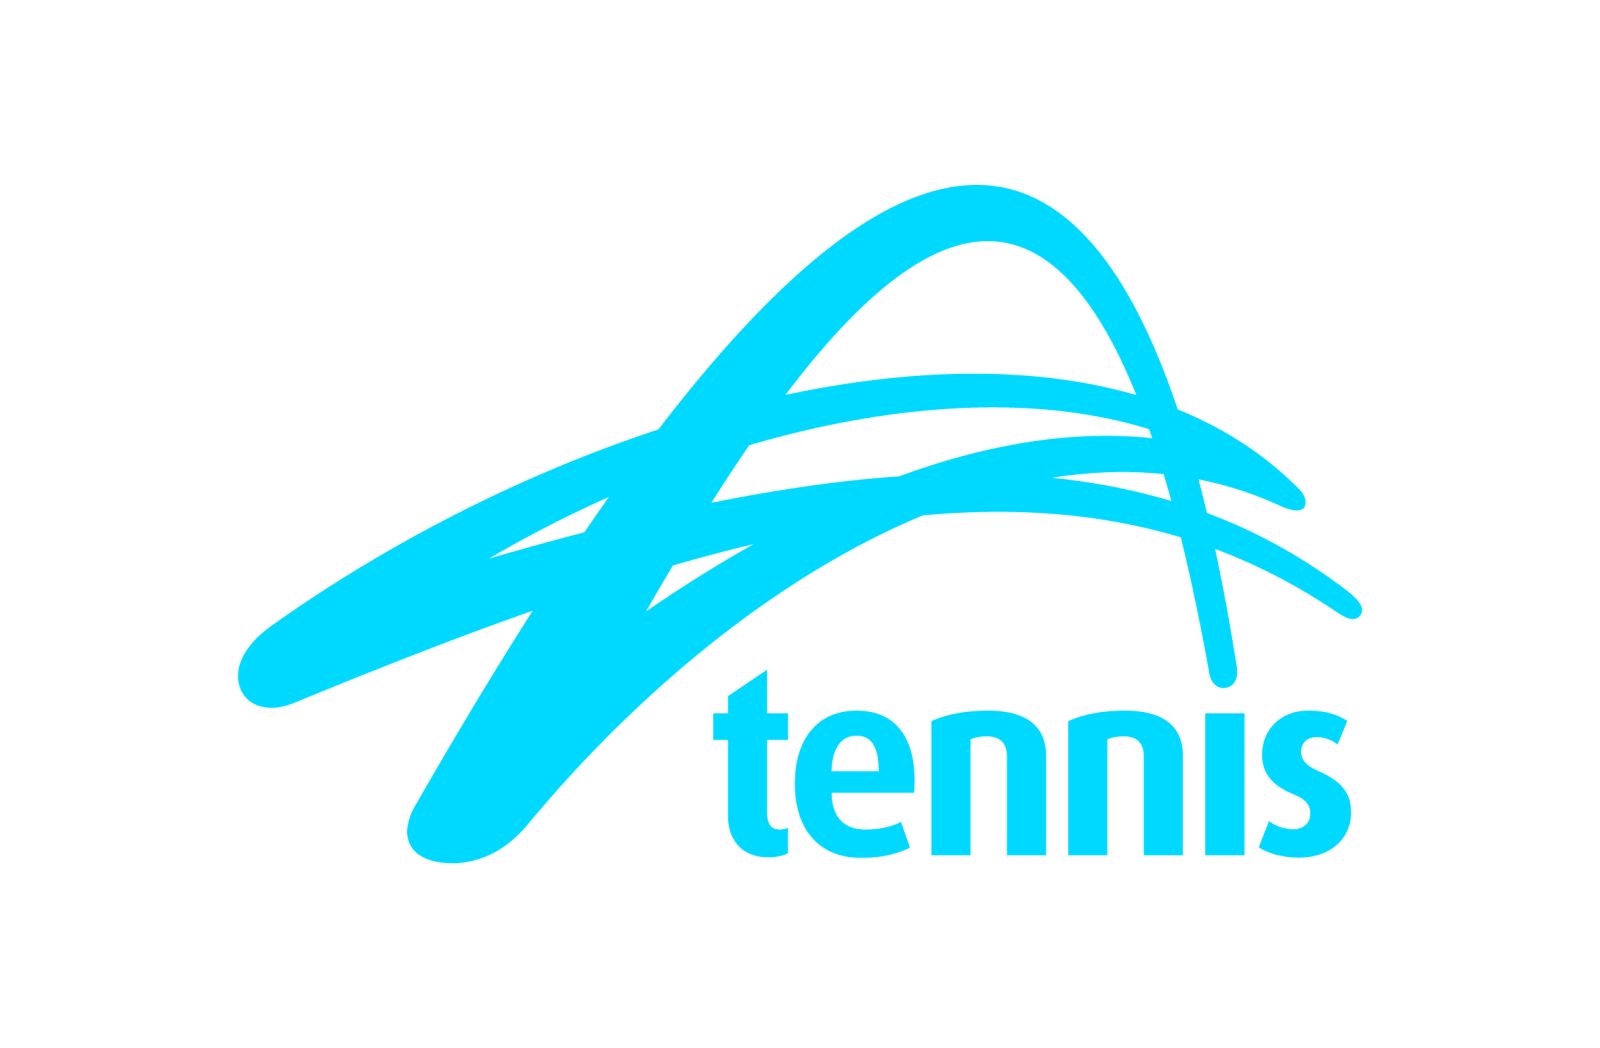 tennis australia